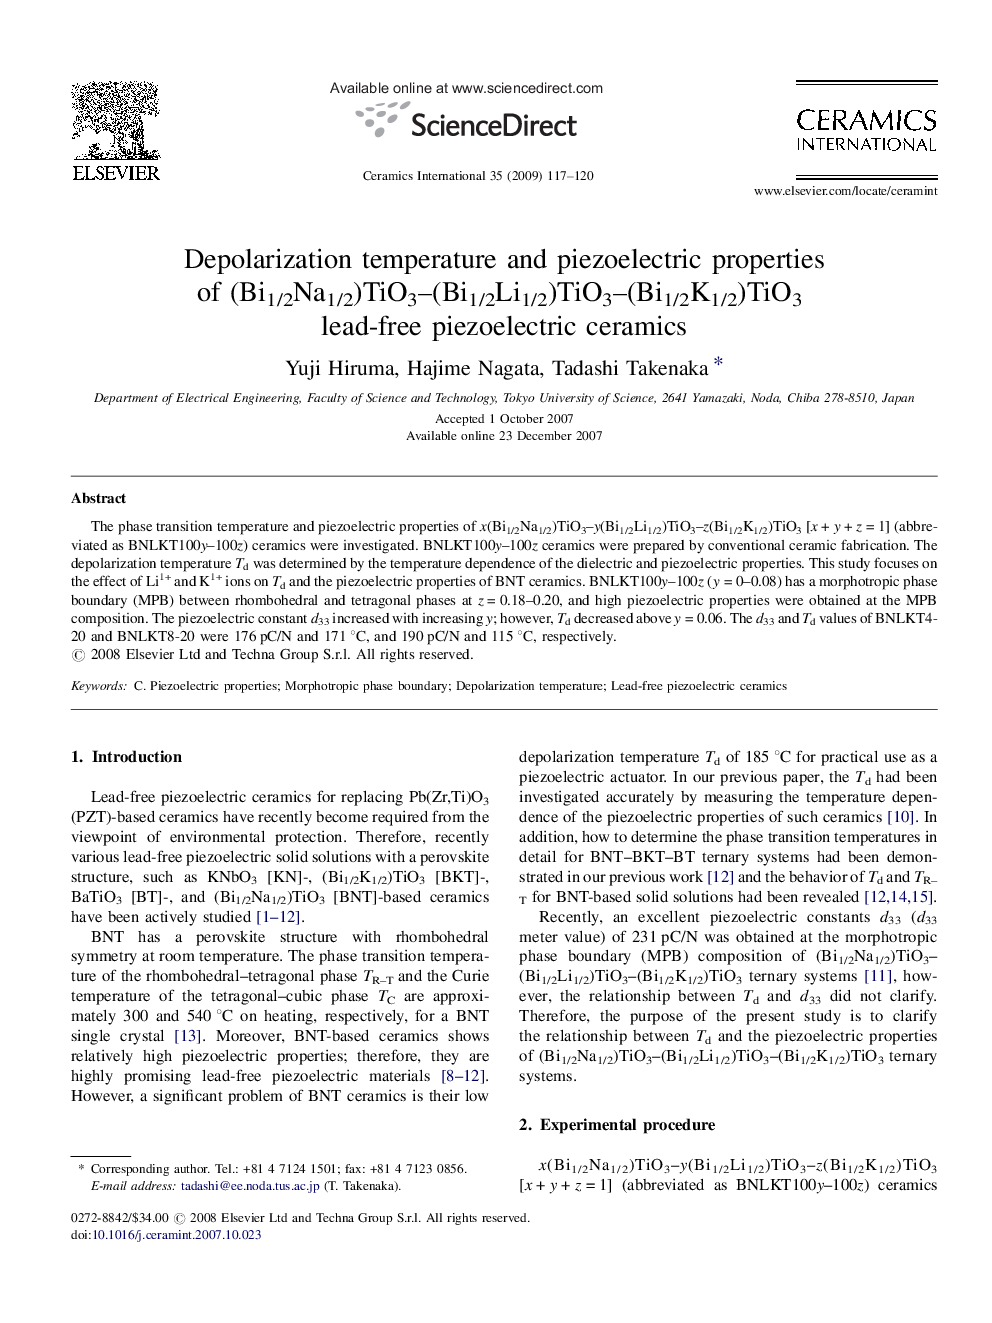 Depolarization temperature and piezoelectric properties of (Bi1/2Na1/2)TiO3–(Bi1/2Li1/2)TiO3–(Bi1/2K1/2)TiO3 lead-free piezoelectric ceramics